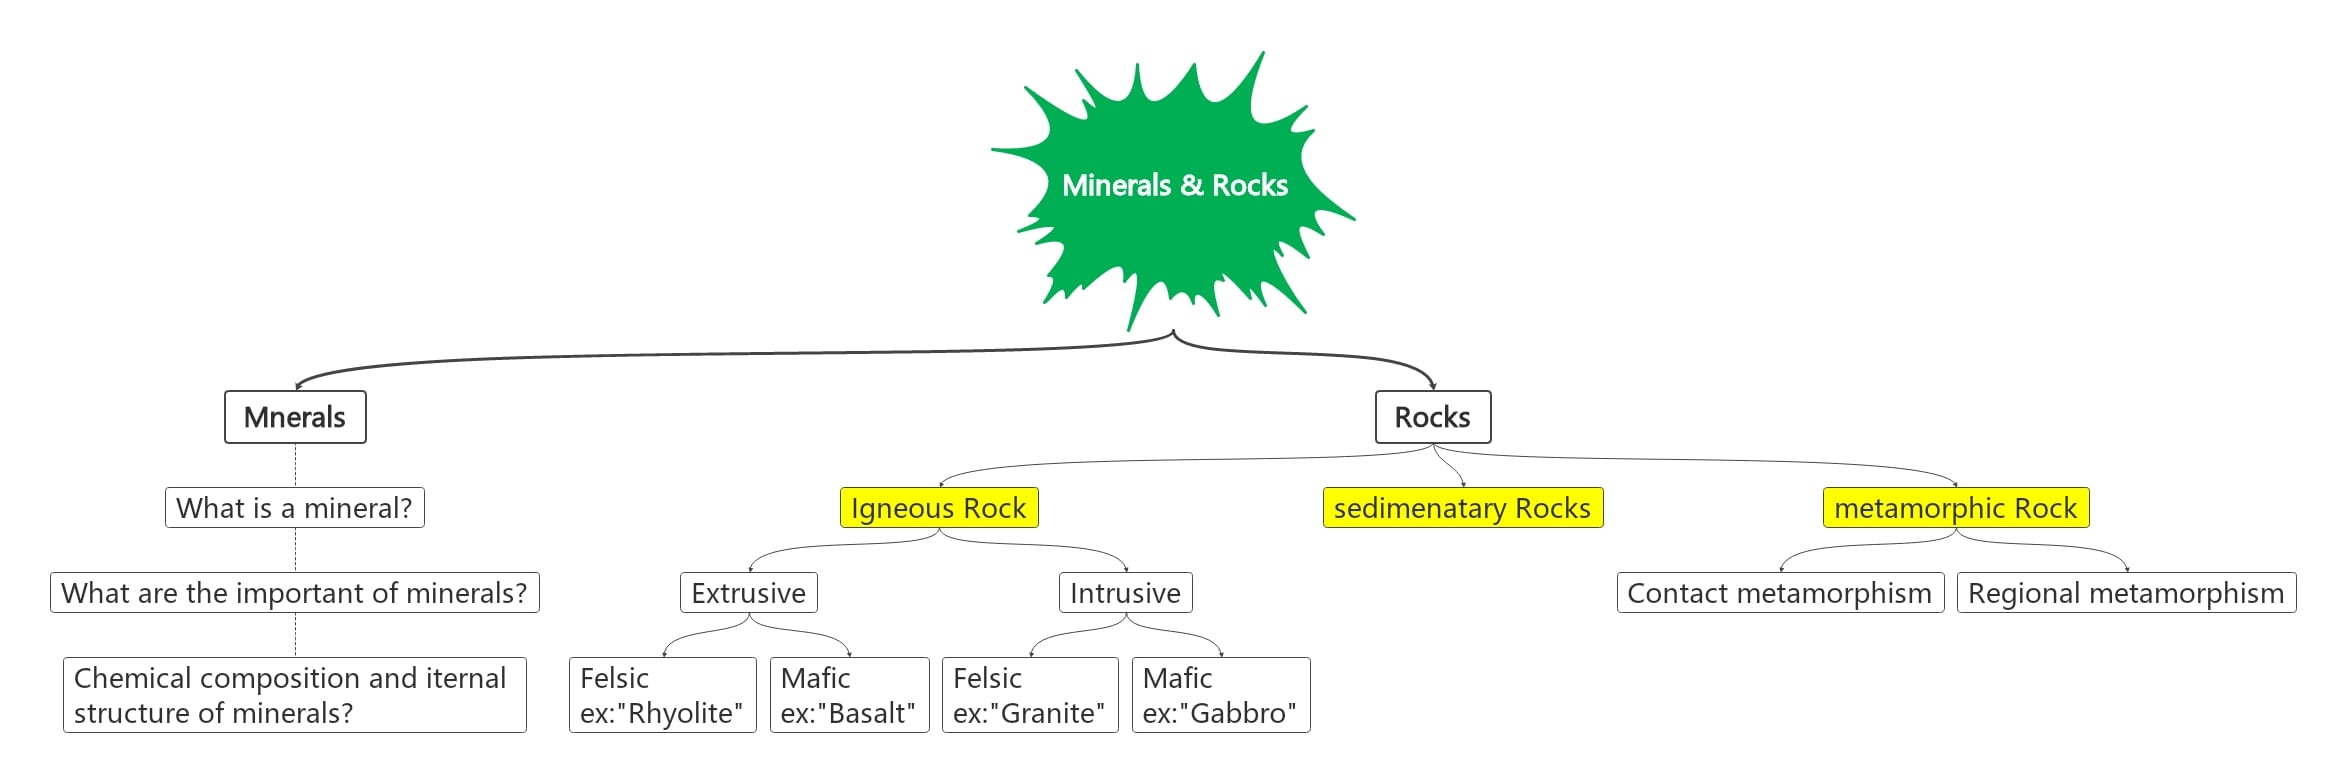 minerals and rocks